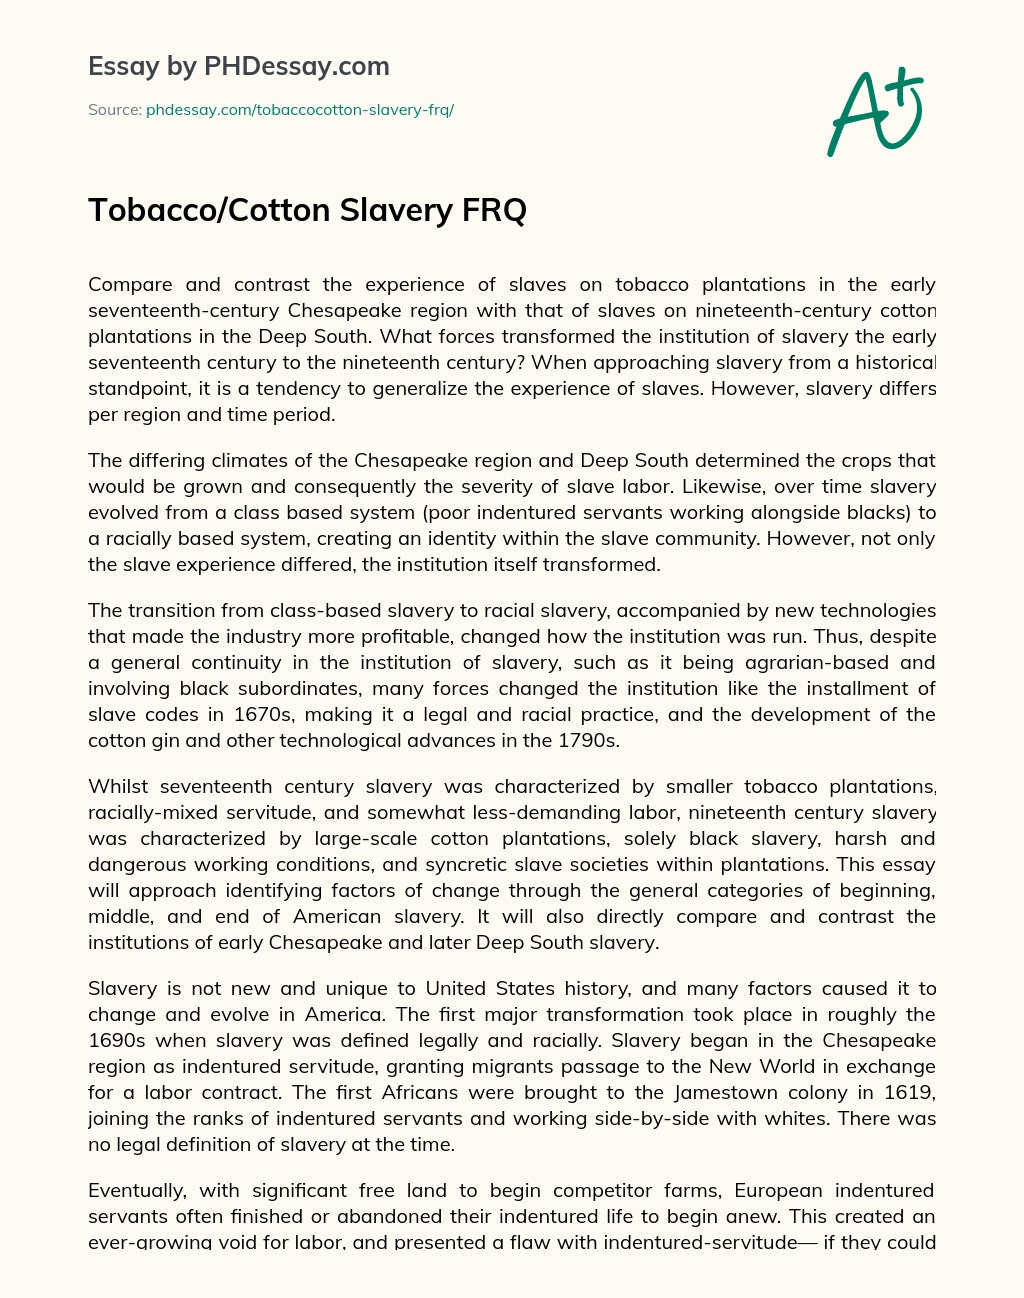 Tobacco/Cotton Slavery FRQ essay